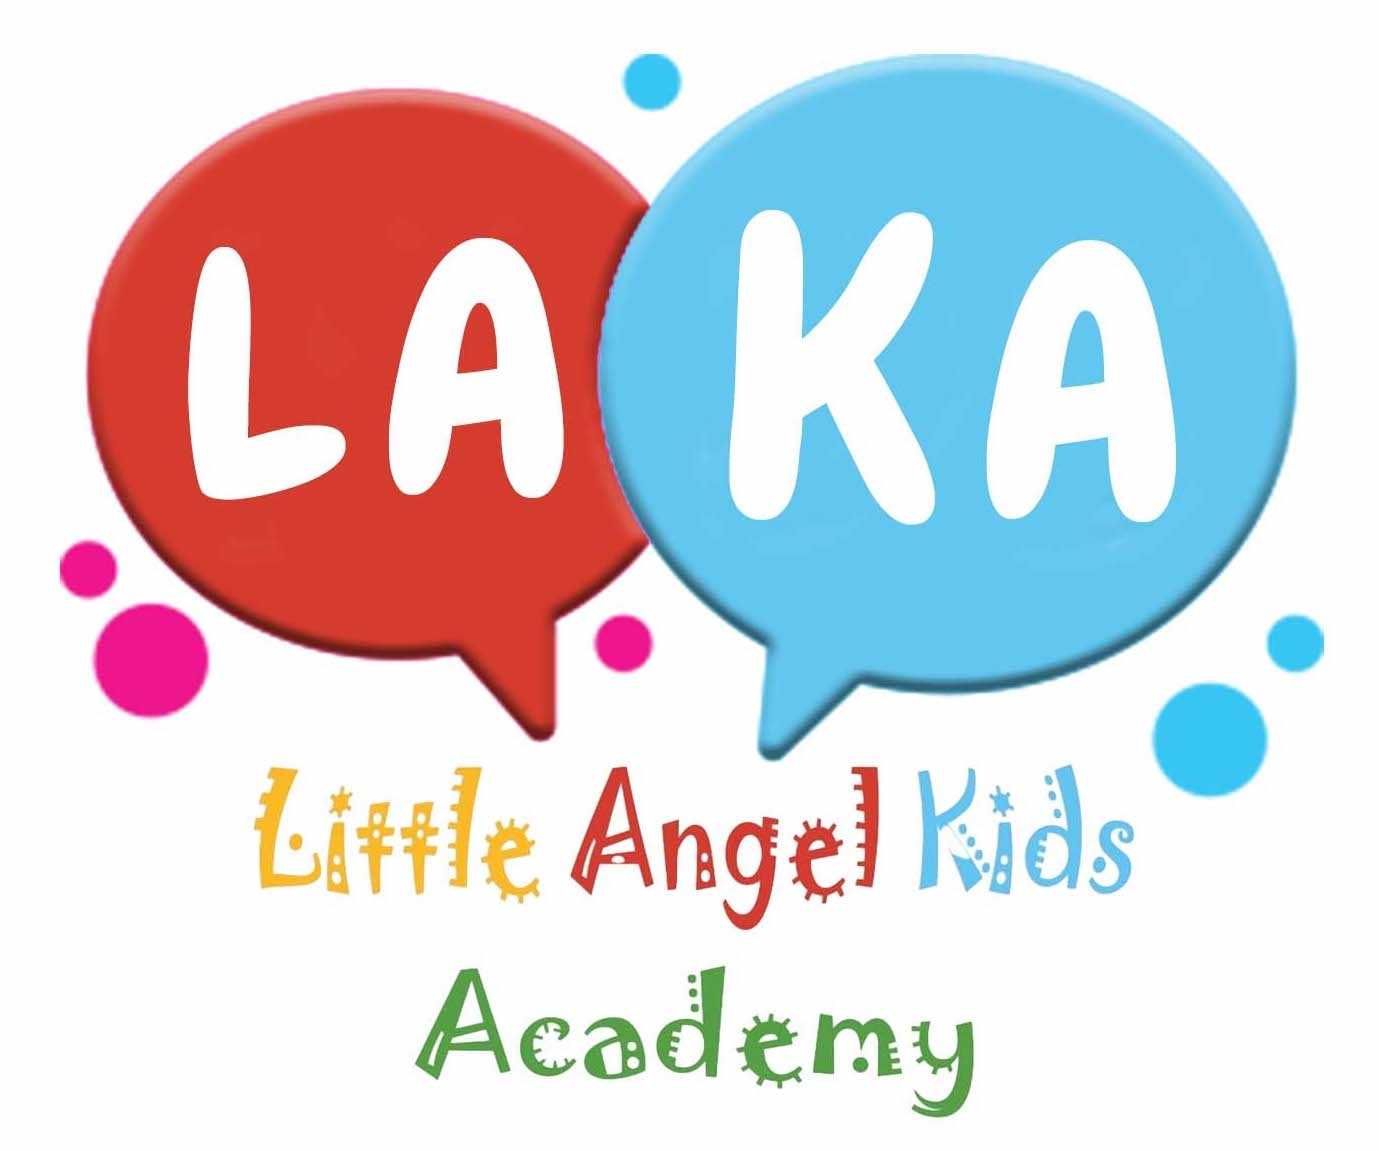 Little Angels Kids Academy